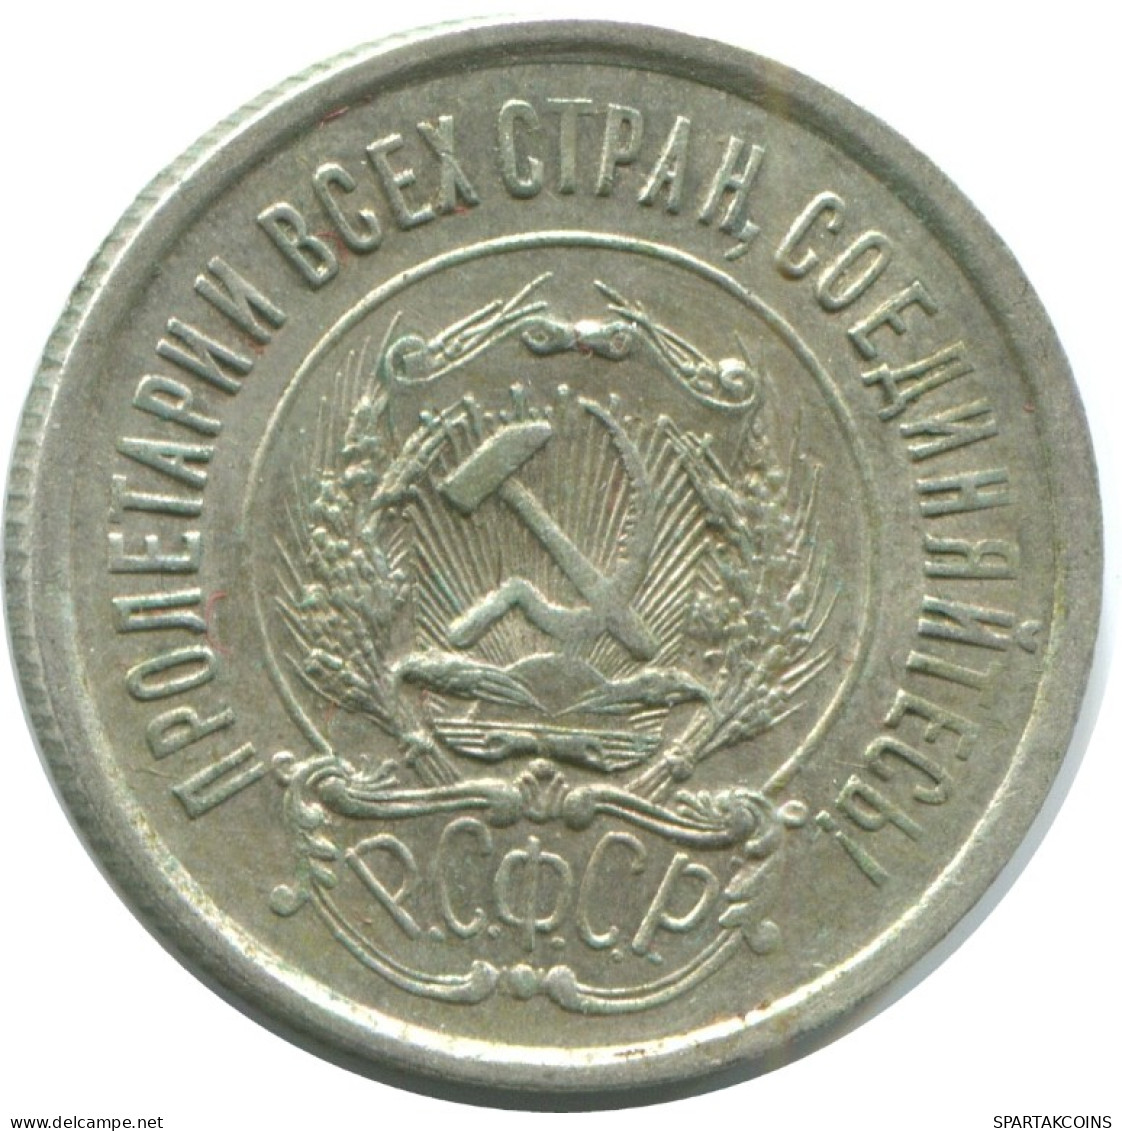 20 KOPEKS 1923 RUSSIA RSFSR SILVER Coin HIGH GRADE #AF460.4.U.A - Russie